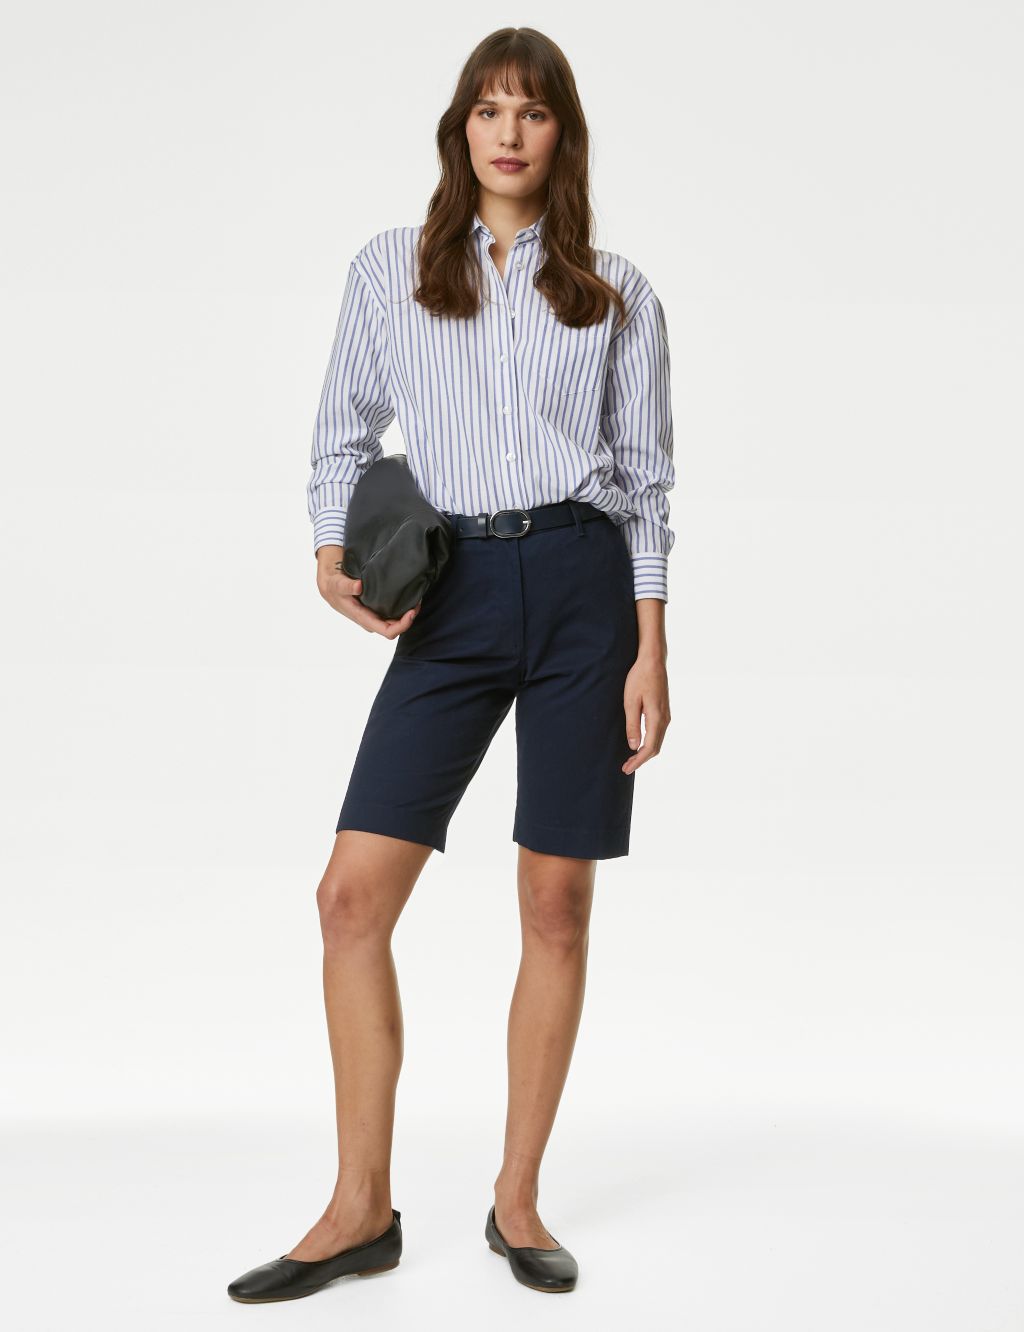 Buy Comfy Print Navy Blue Cotton Bermuda Shorts For Women Plus